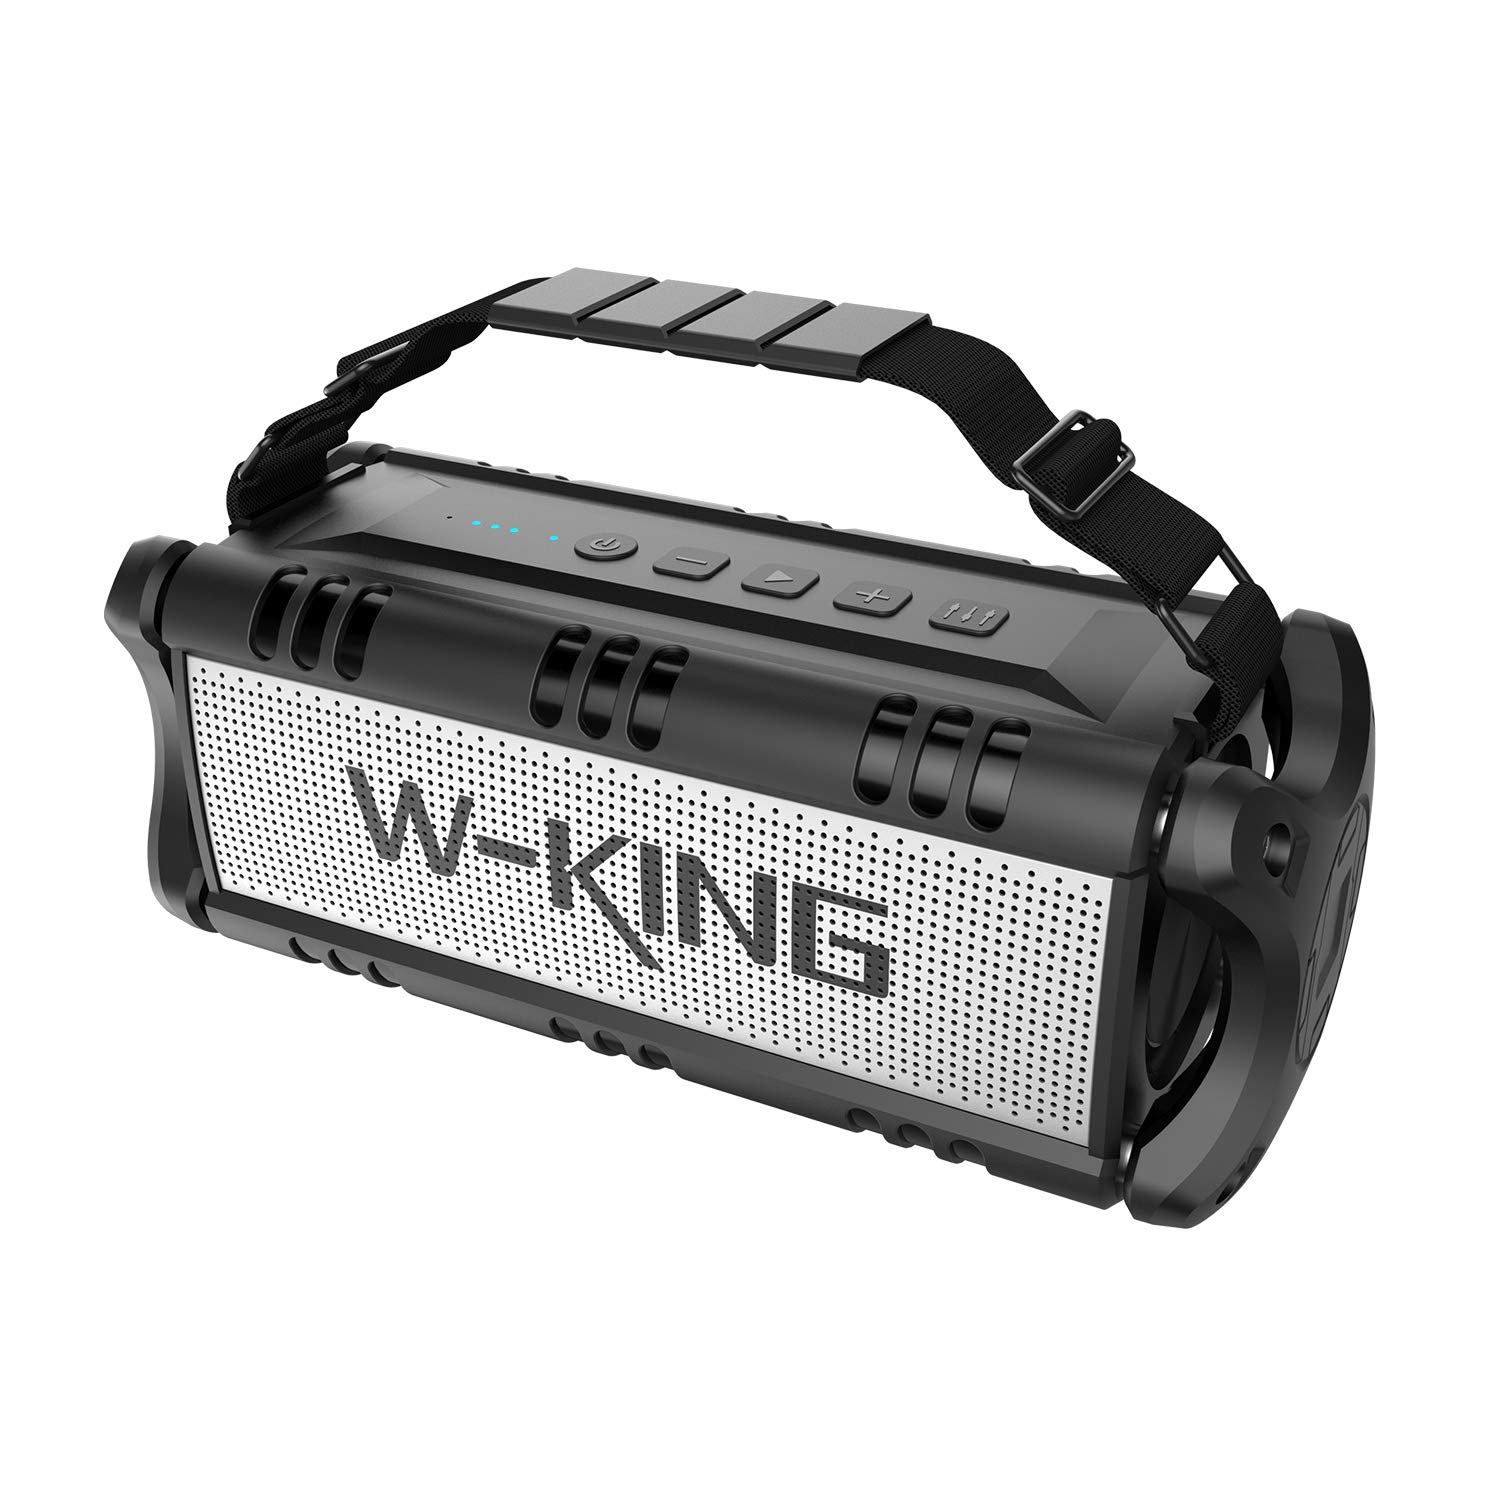 W-KING D8 Bluetooth Hoparlör (50W)